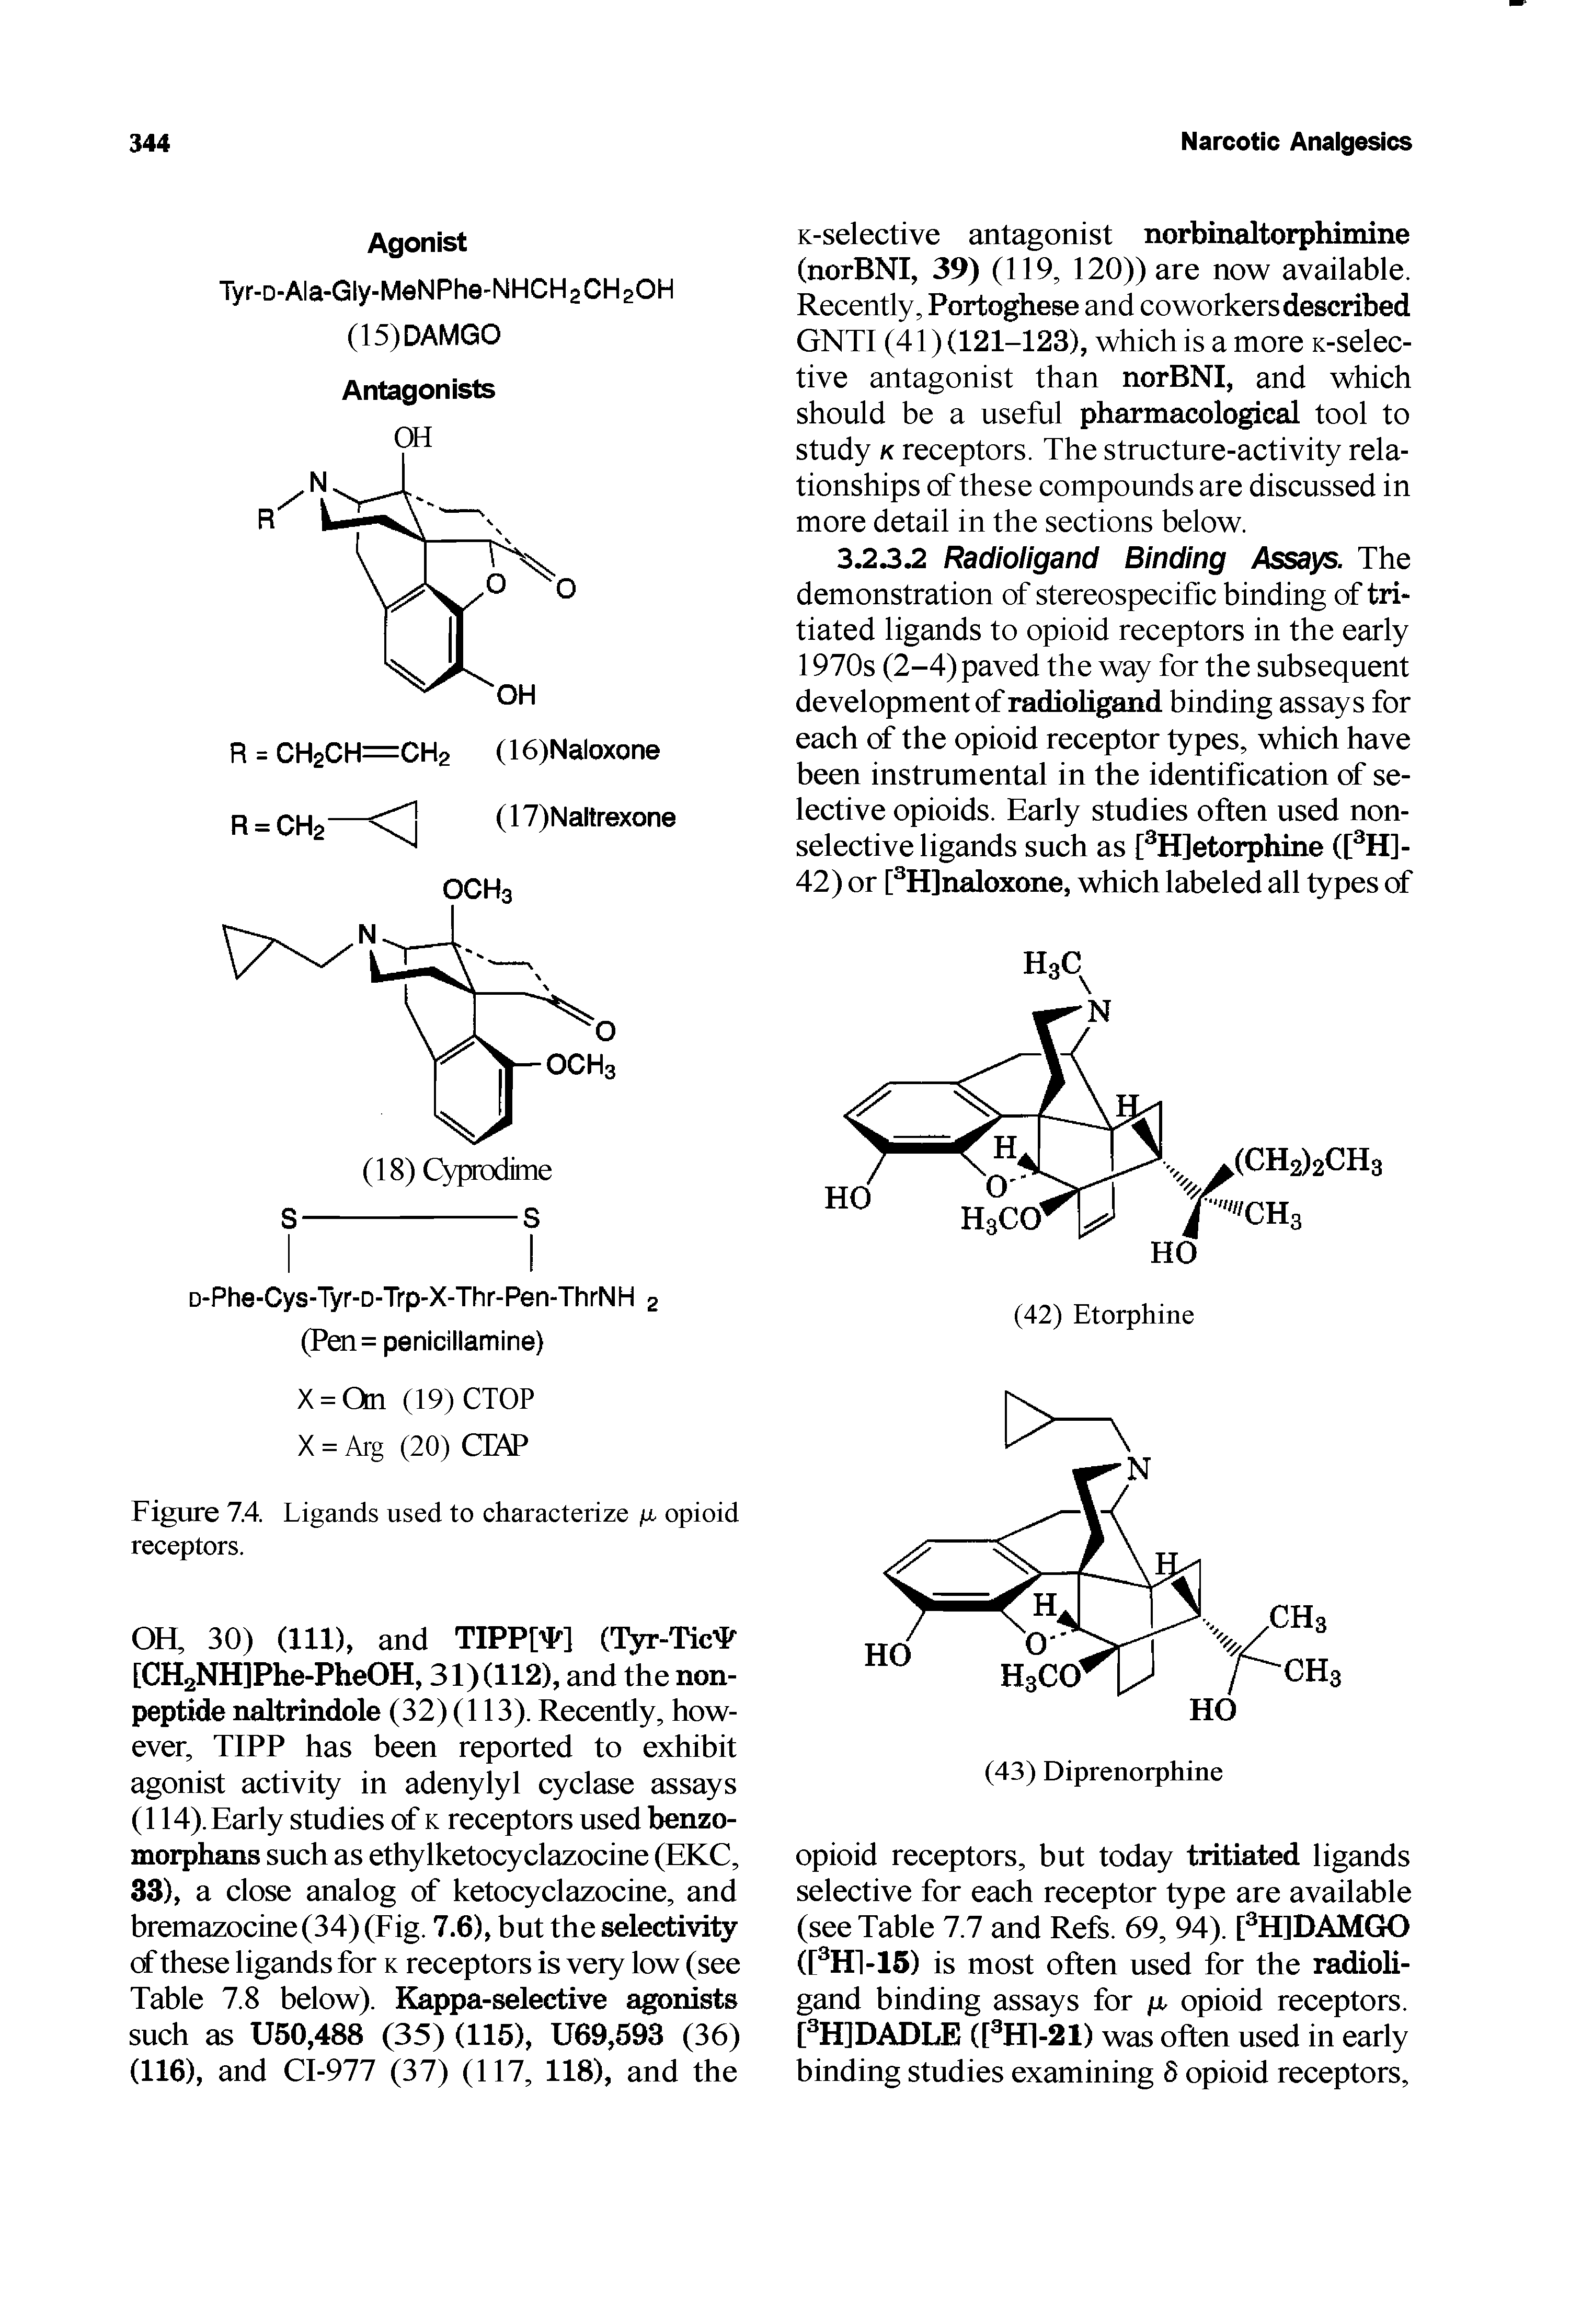 Figure 7.4. Ligands used to characterize g opioid receptors.